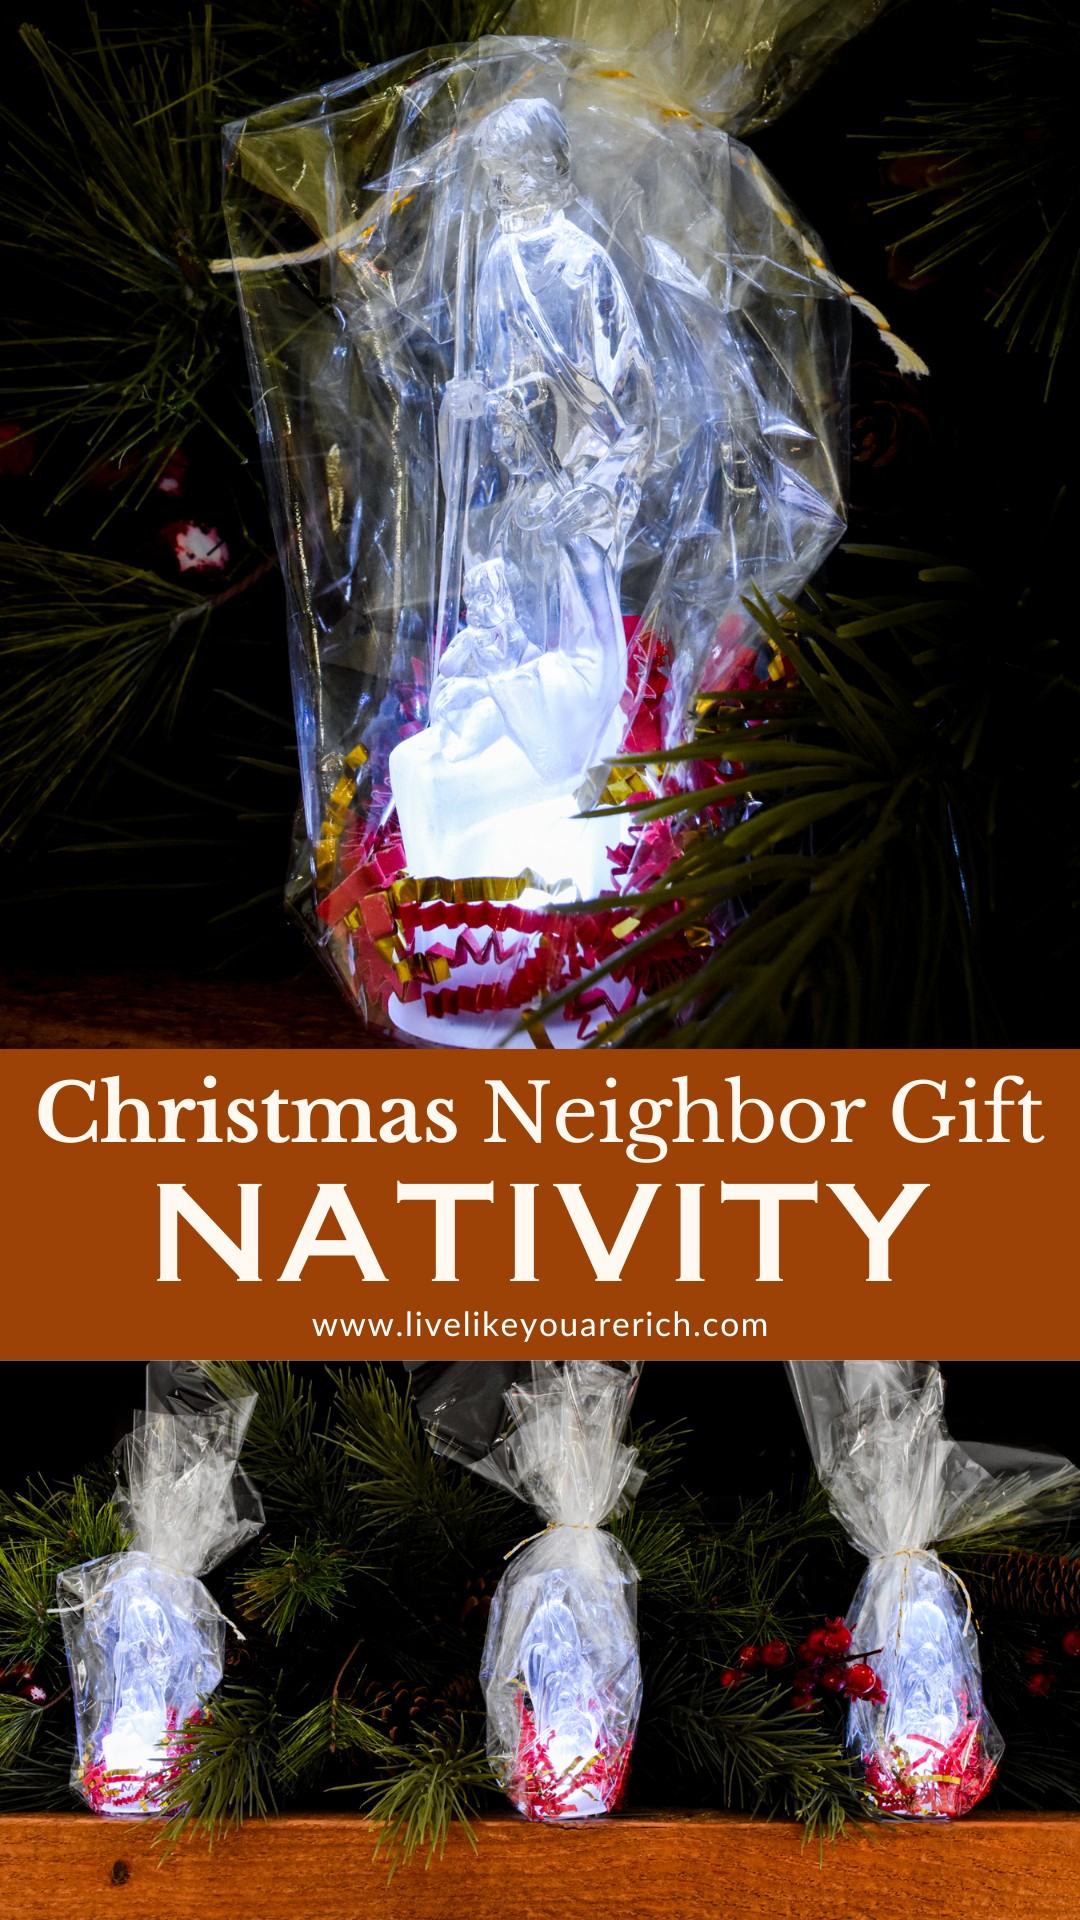 Neighbor Christmas Gift: Nativity